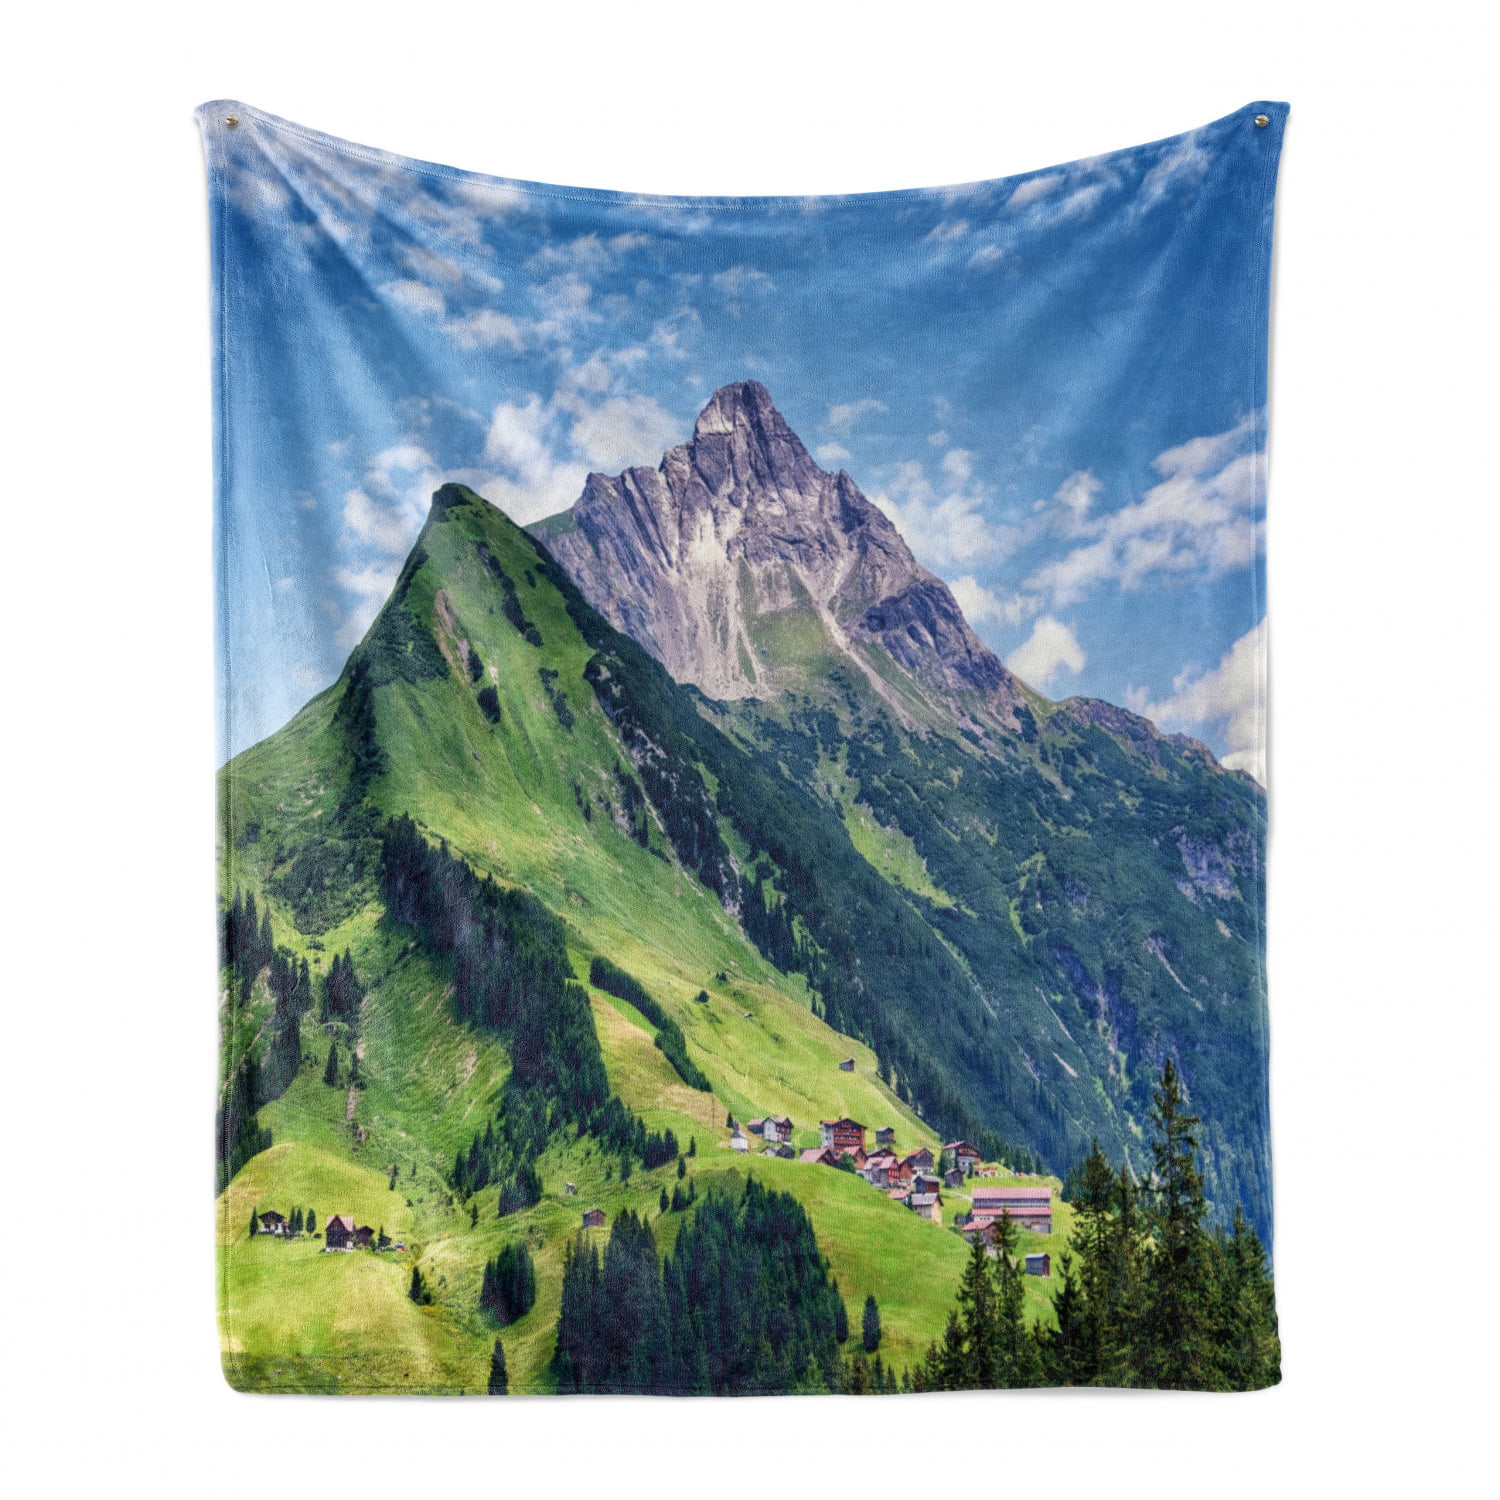 Flannel Fleece Blanket,Mountain Peak Sunset Art Landscape Cozy Plush Microfiber Throw Blankets-Lightweight Reversible Soft Warm Blanket,All Season Bed Blankets for Couch Sofa Throw 40x50 Inch